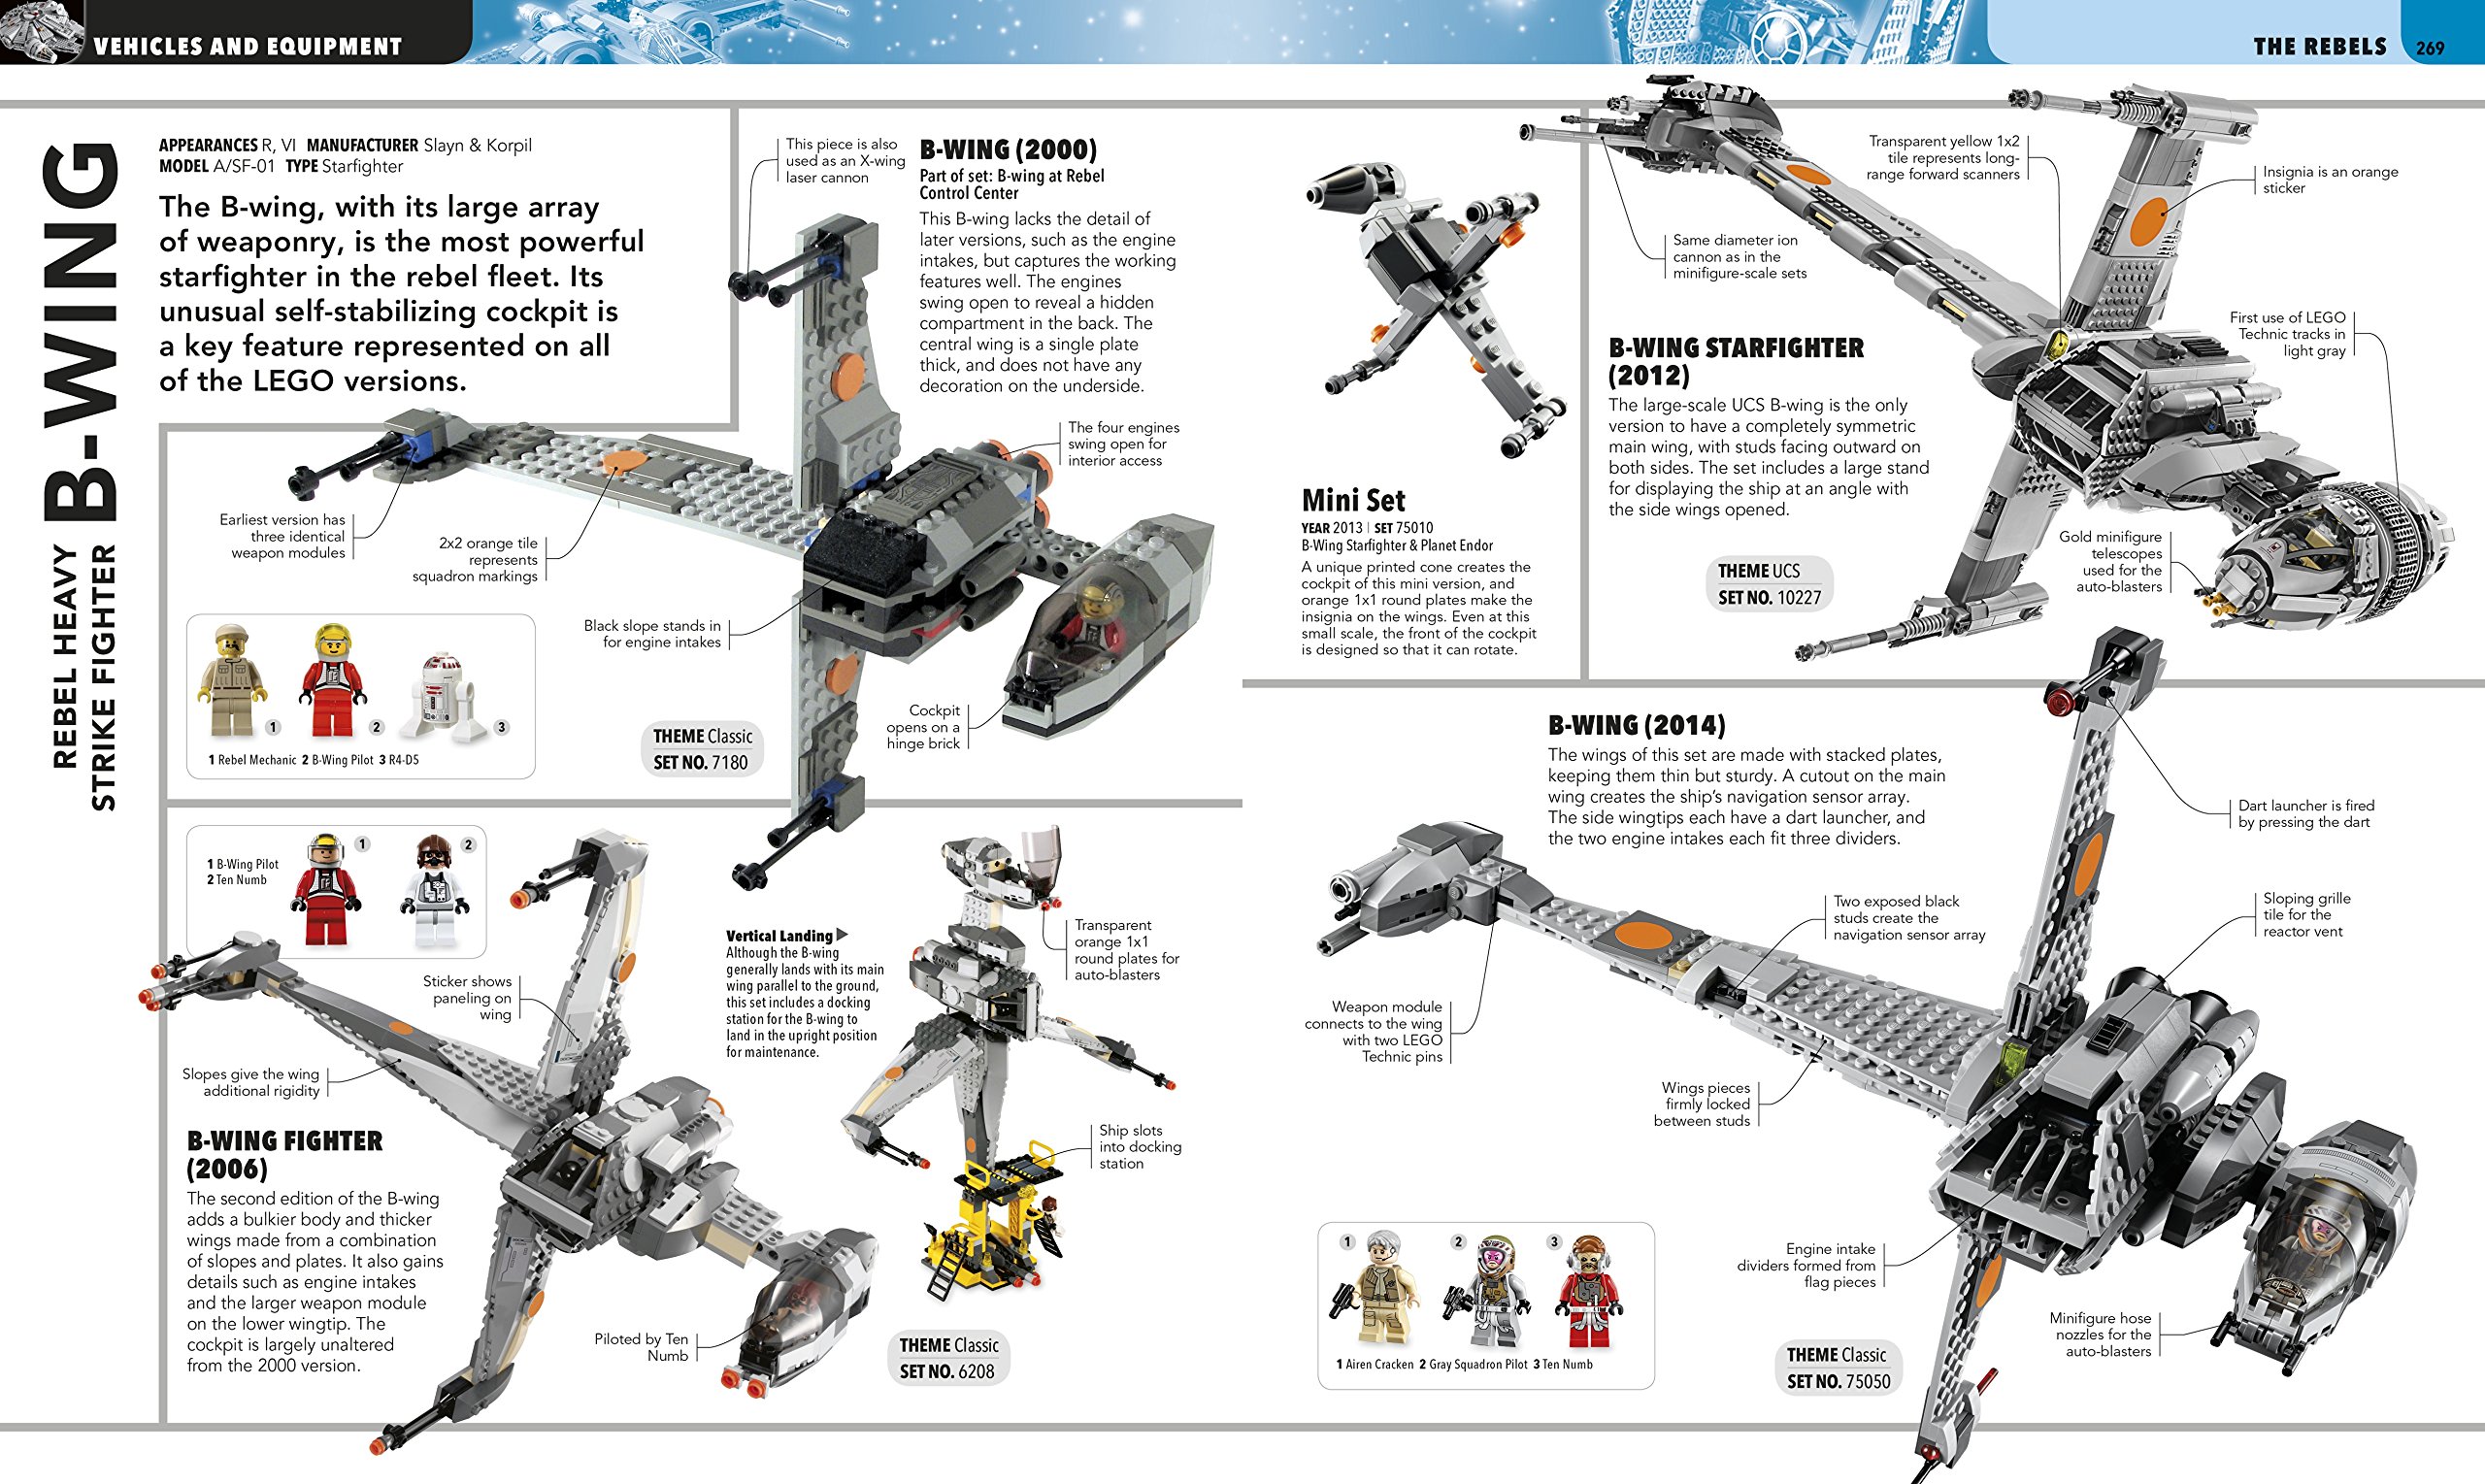 Ultimate LEGO Star Wars B-wing spread